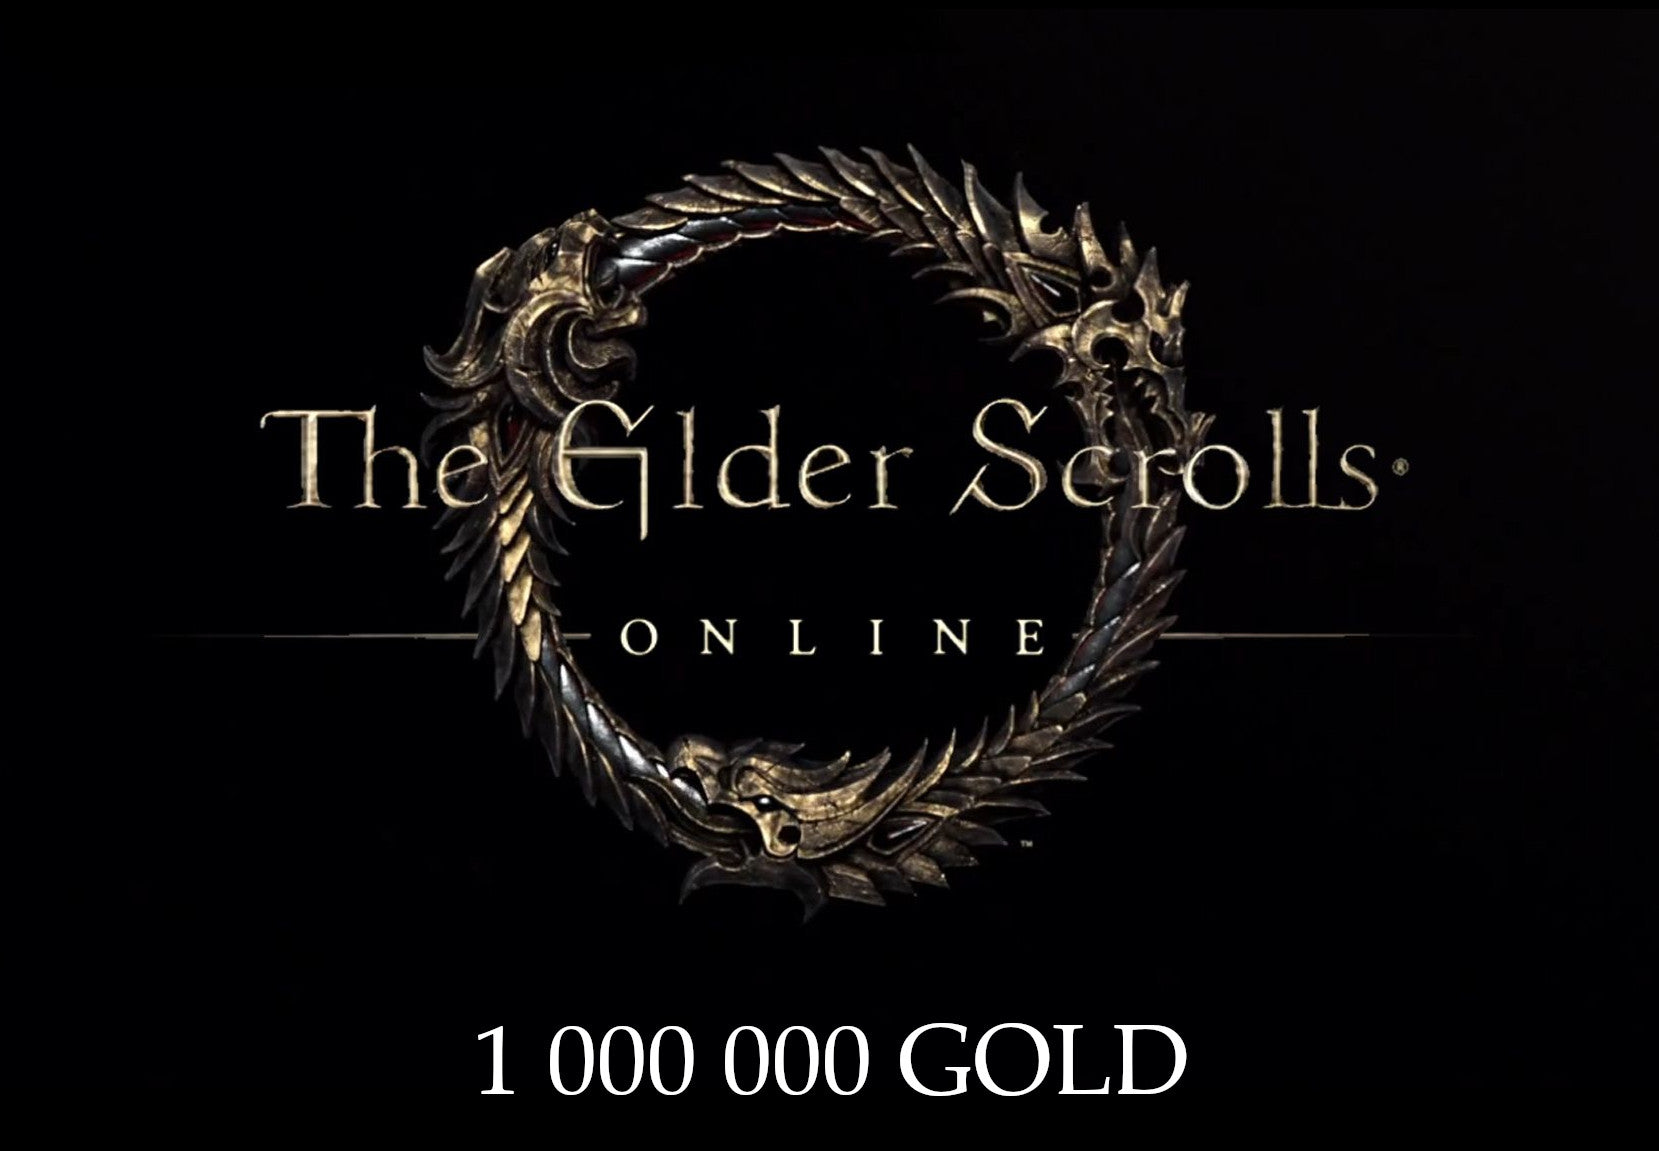 THE ELDER SCROLLS ONLINE GOLD 1000K (EU) - PC - OTHER - MULTILANGUAGE - EU - Libelula Vesela - Jocuri Video